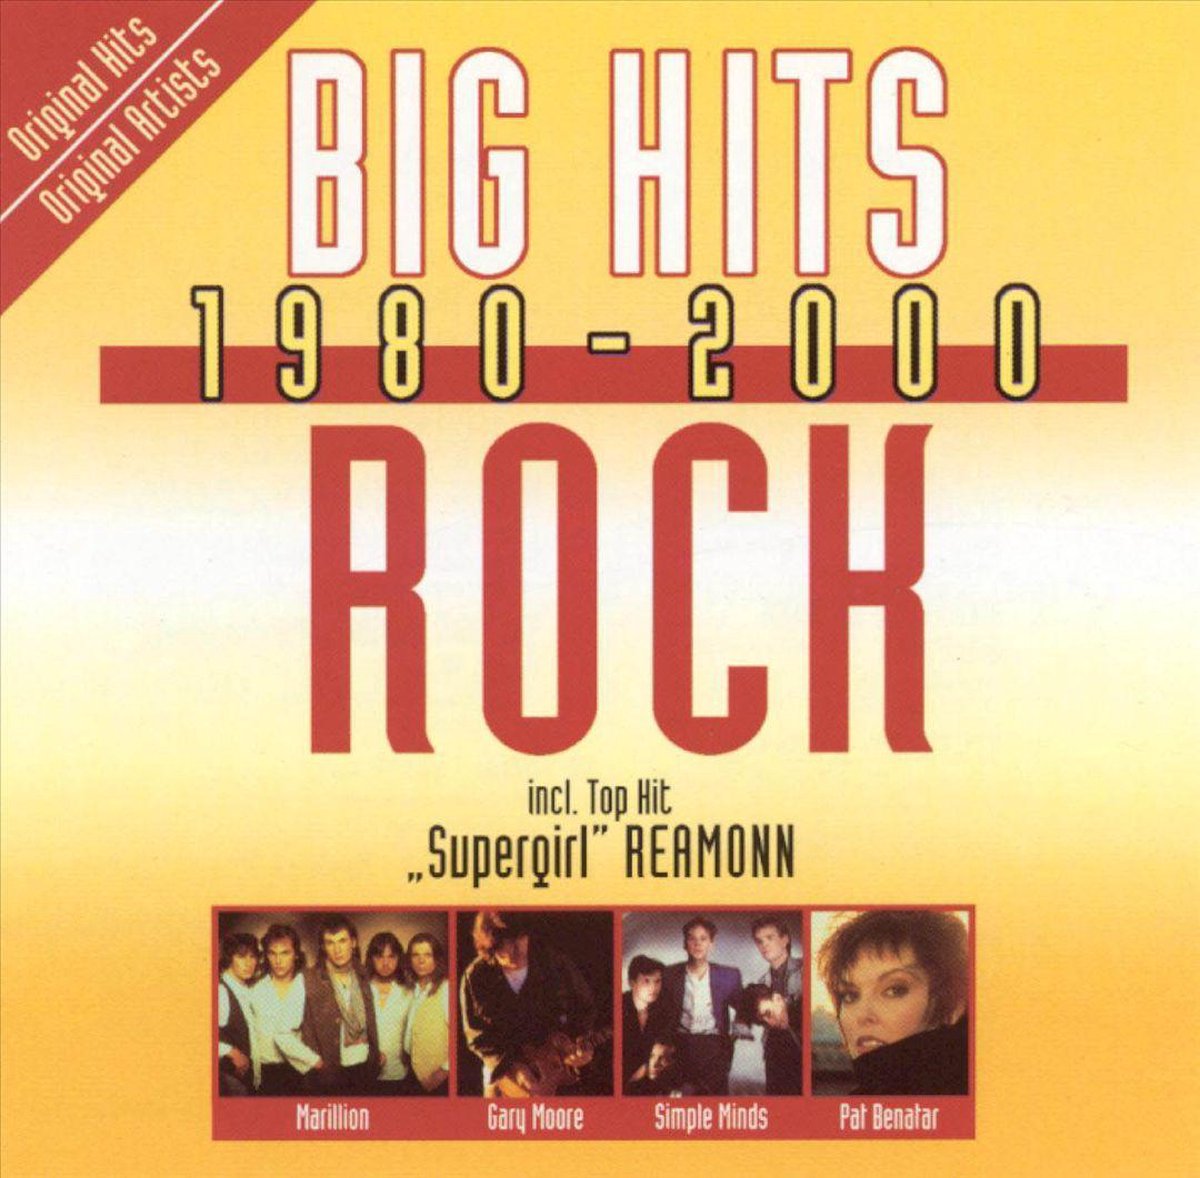 Big Hits, 1980-2000: Rock - various artists